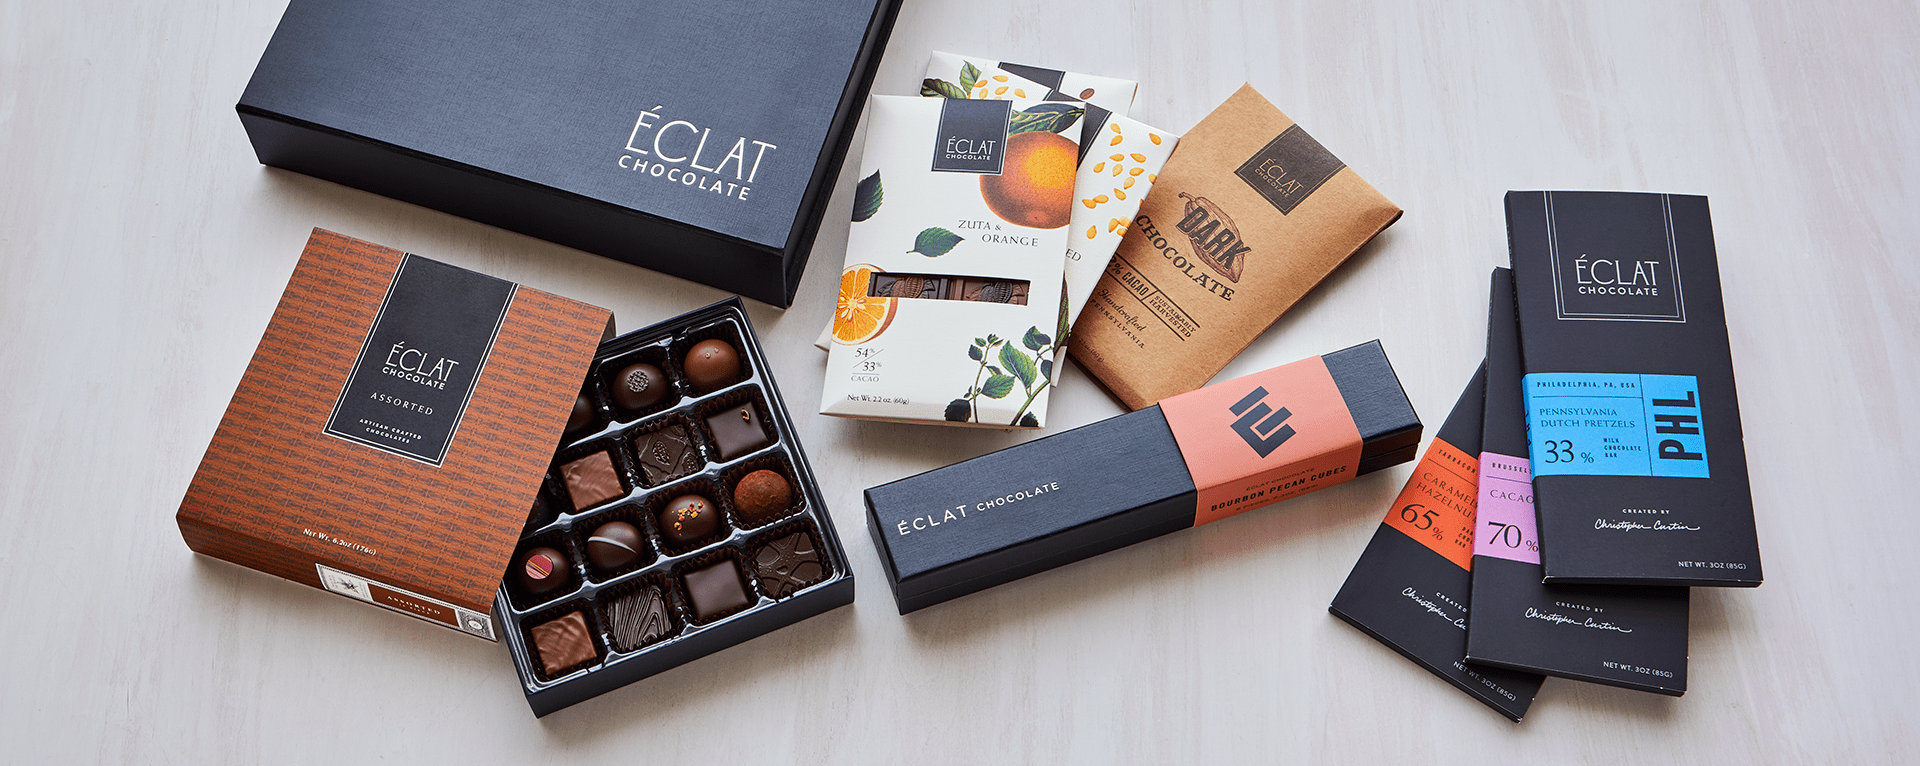 eclat chocolate gift set